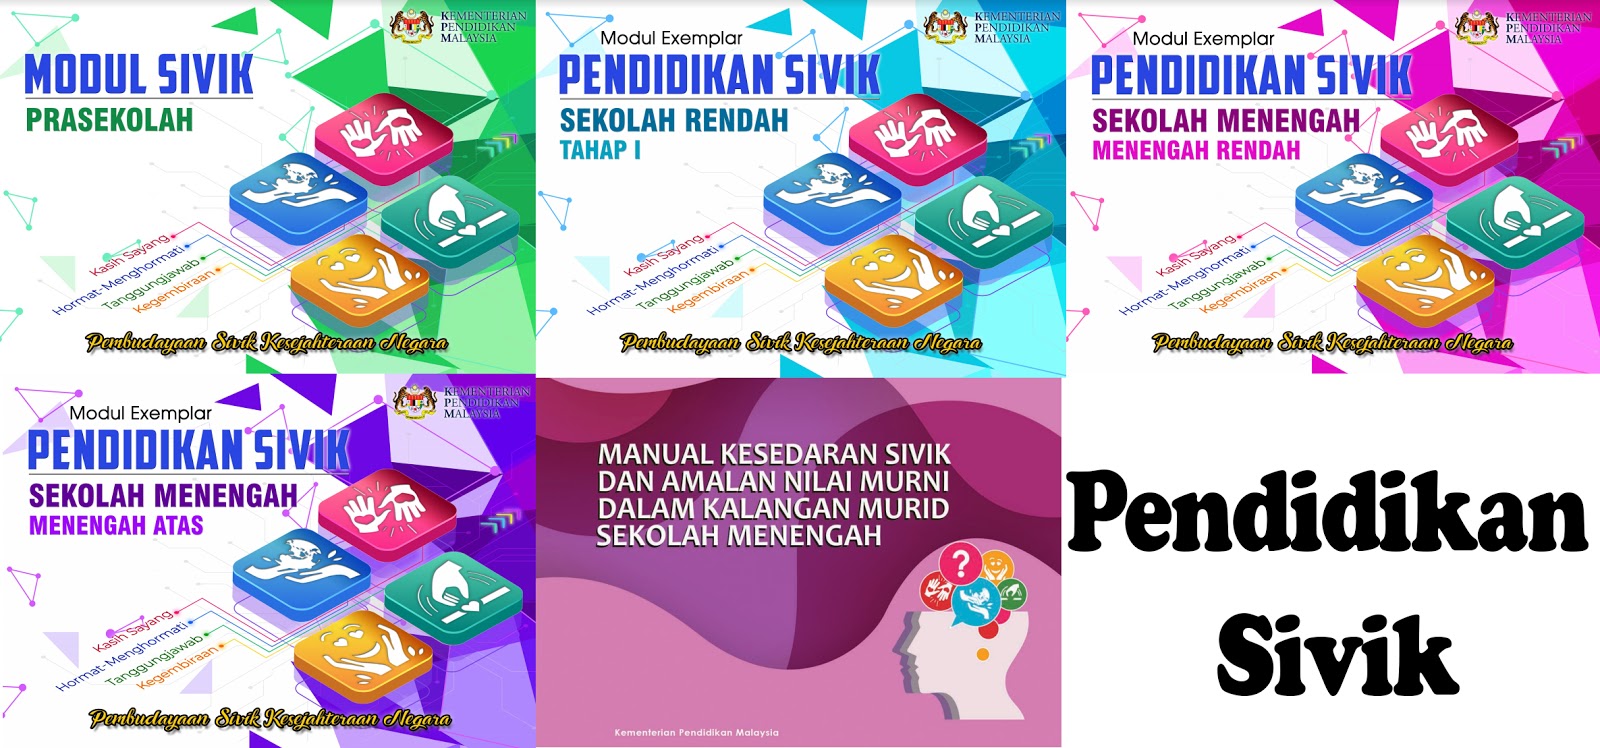 Muat Turun Manual Exemplar Pendidikan Sivik 2019 Infomalay12 Blogspot Com Info Malay